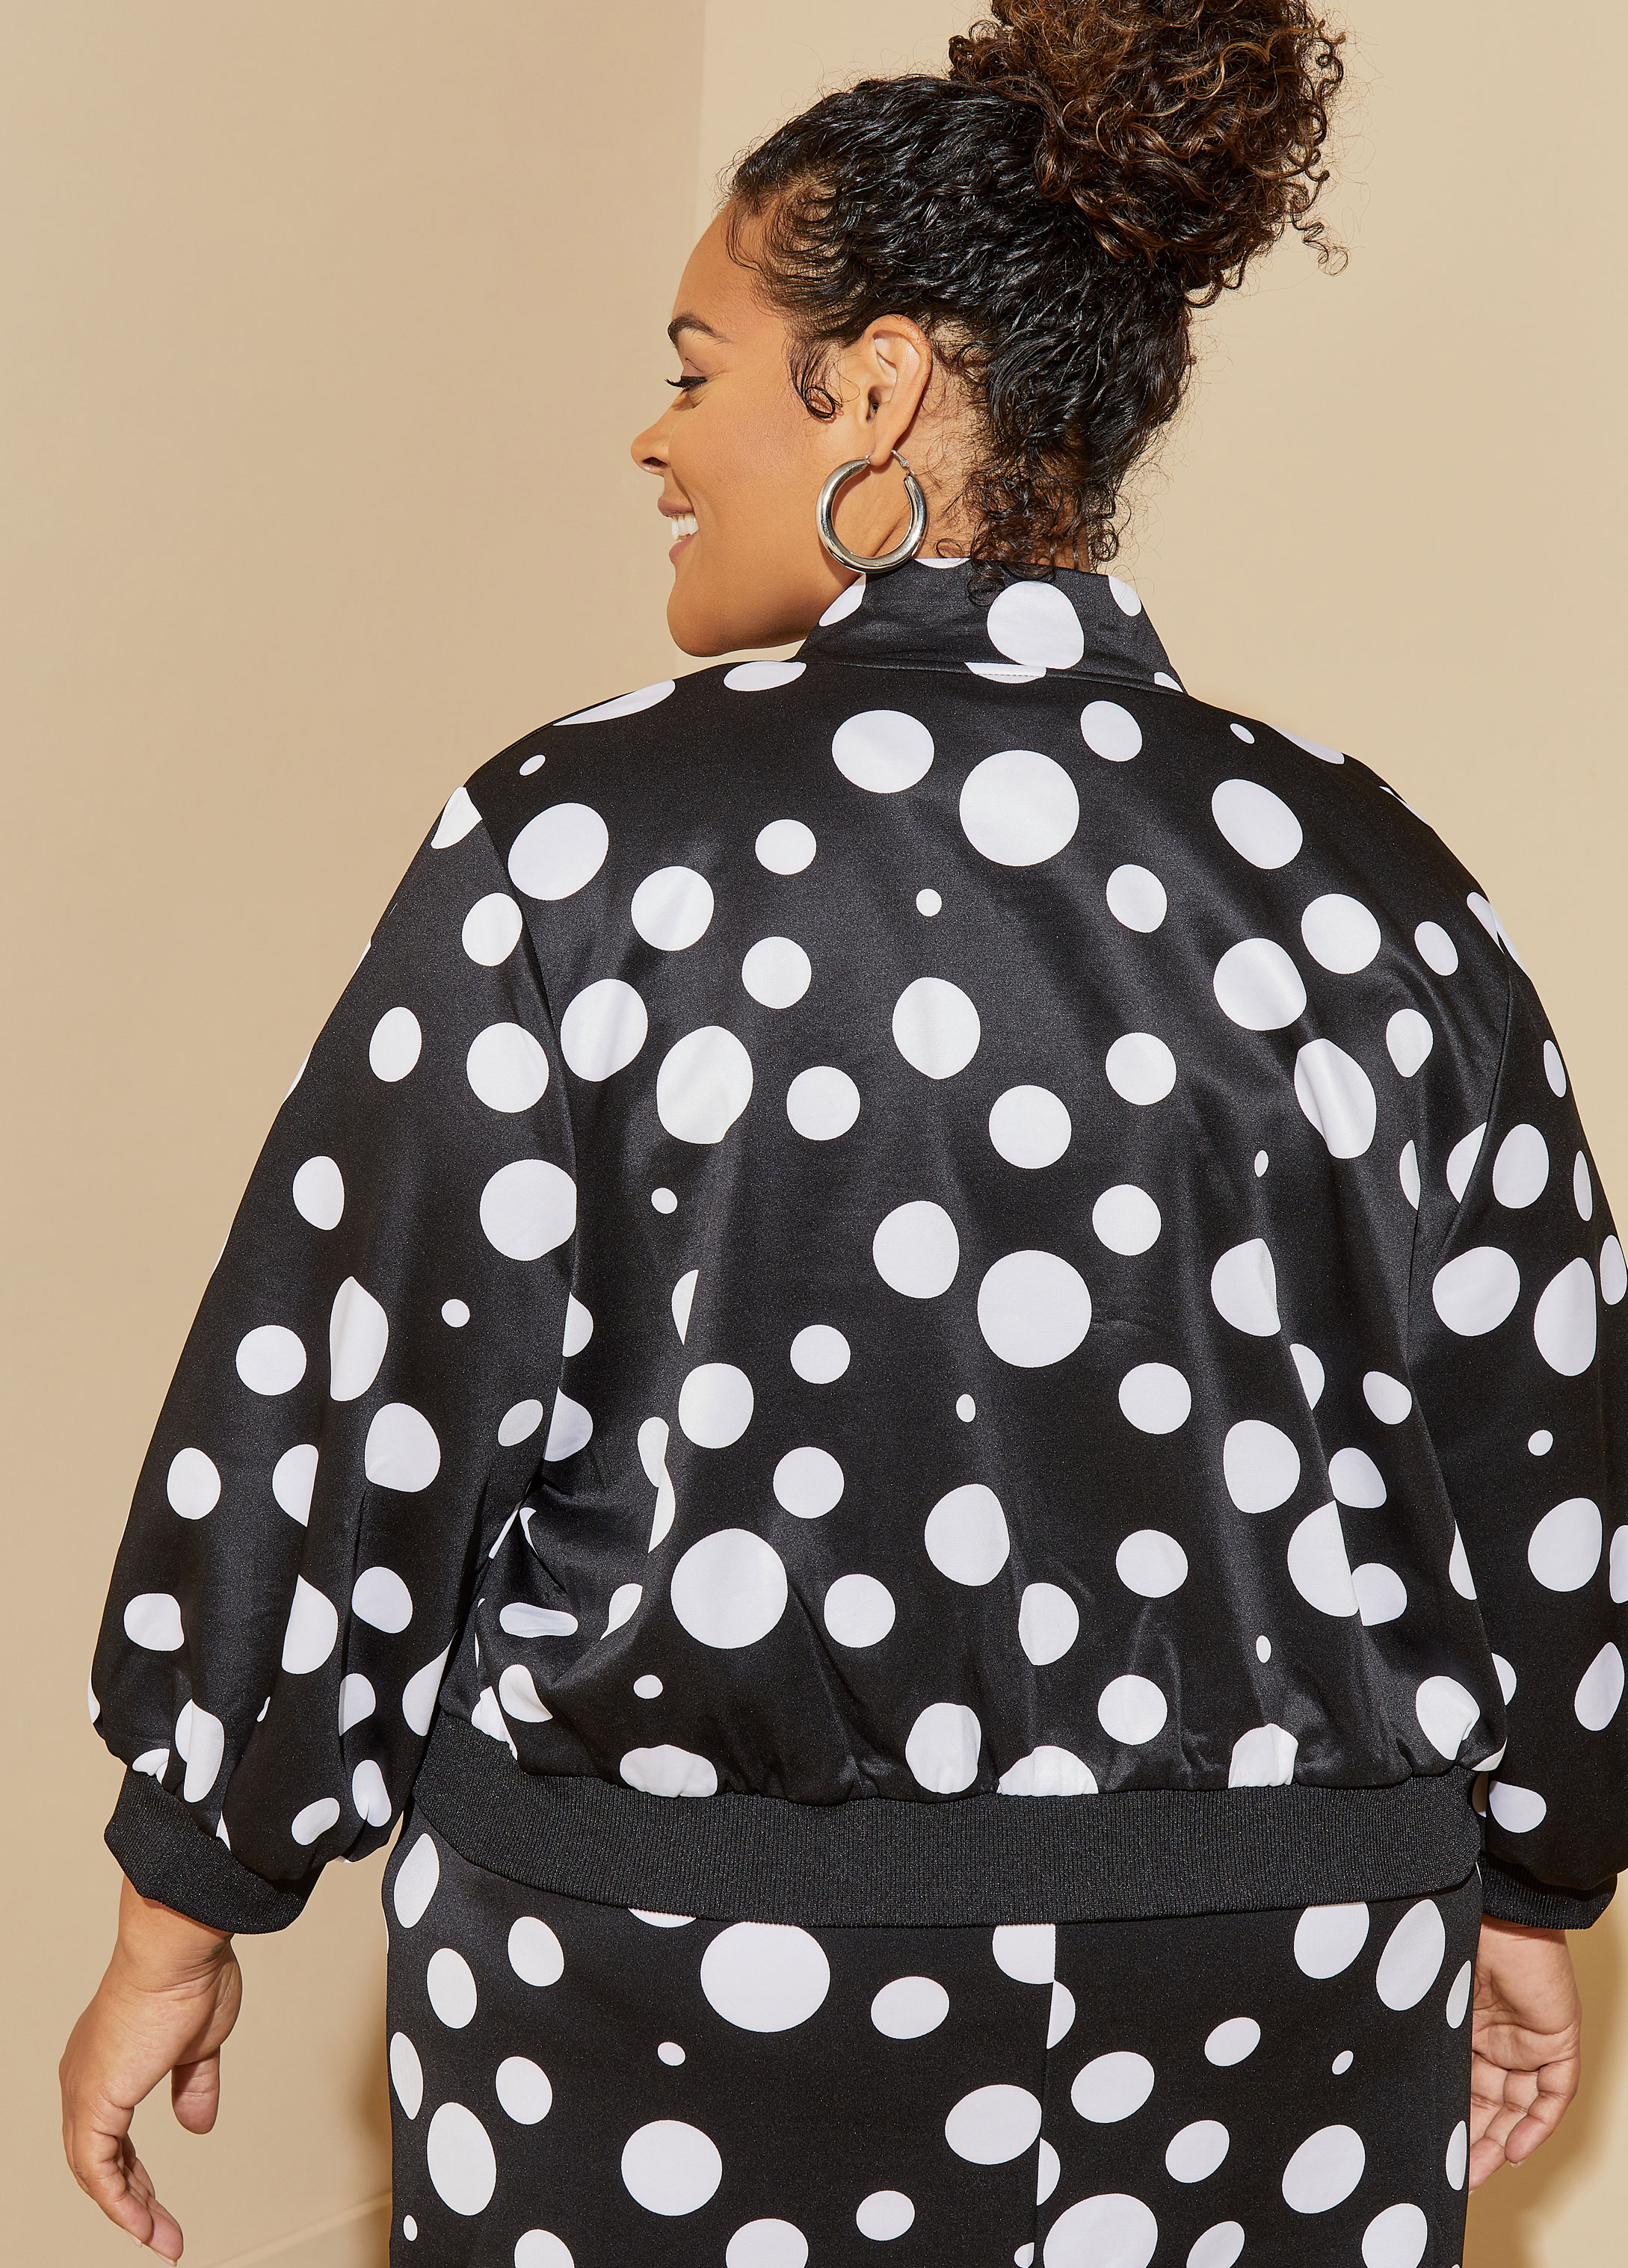 Plus Size polka dot track jacket knit jersey streetwear set fashion